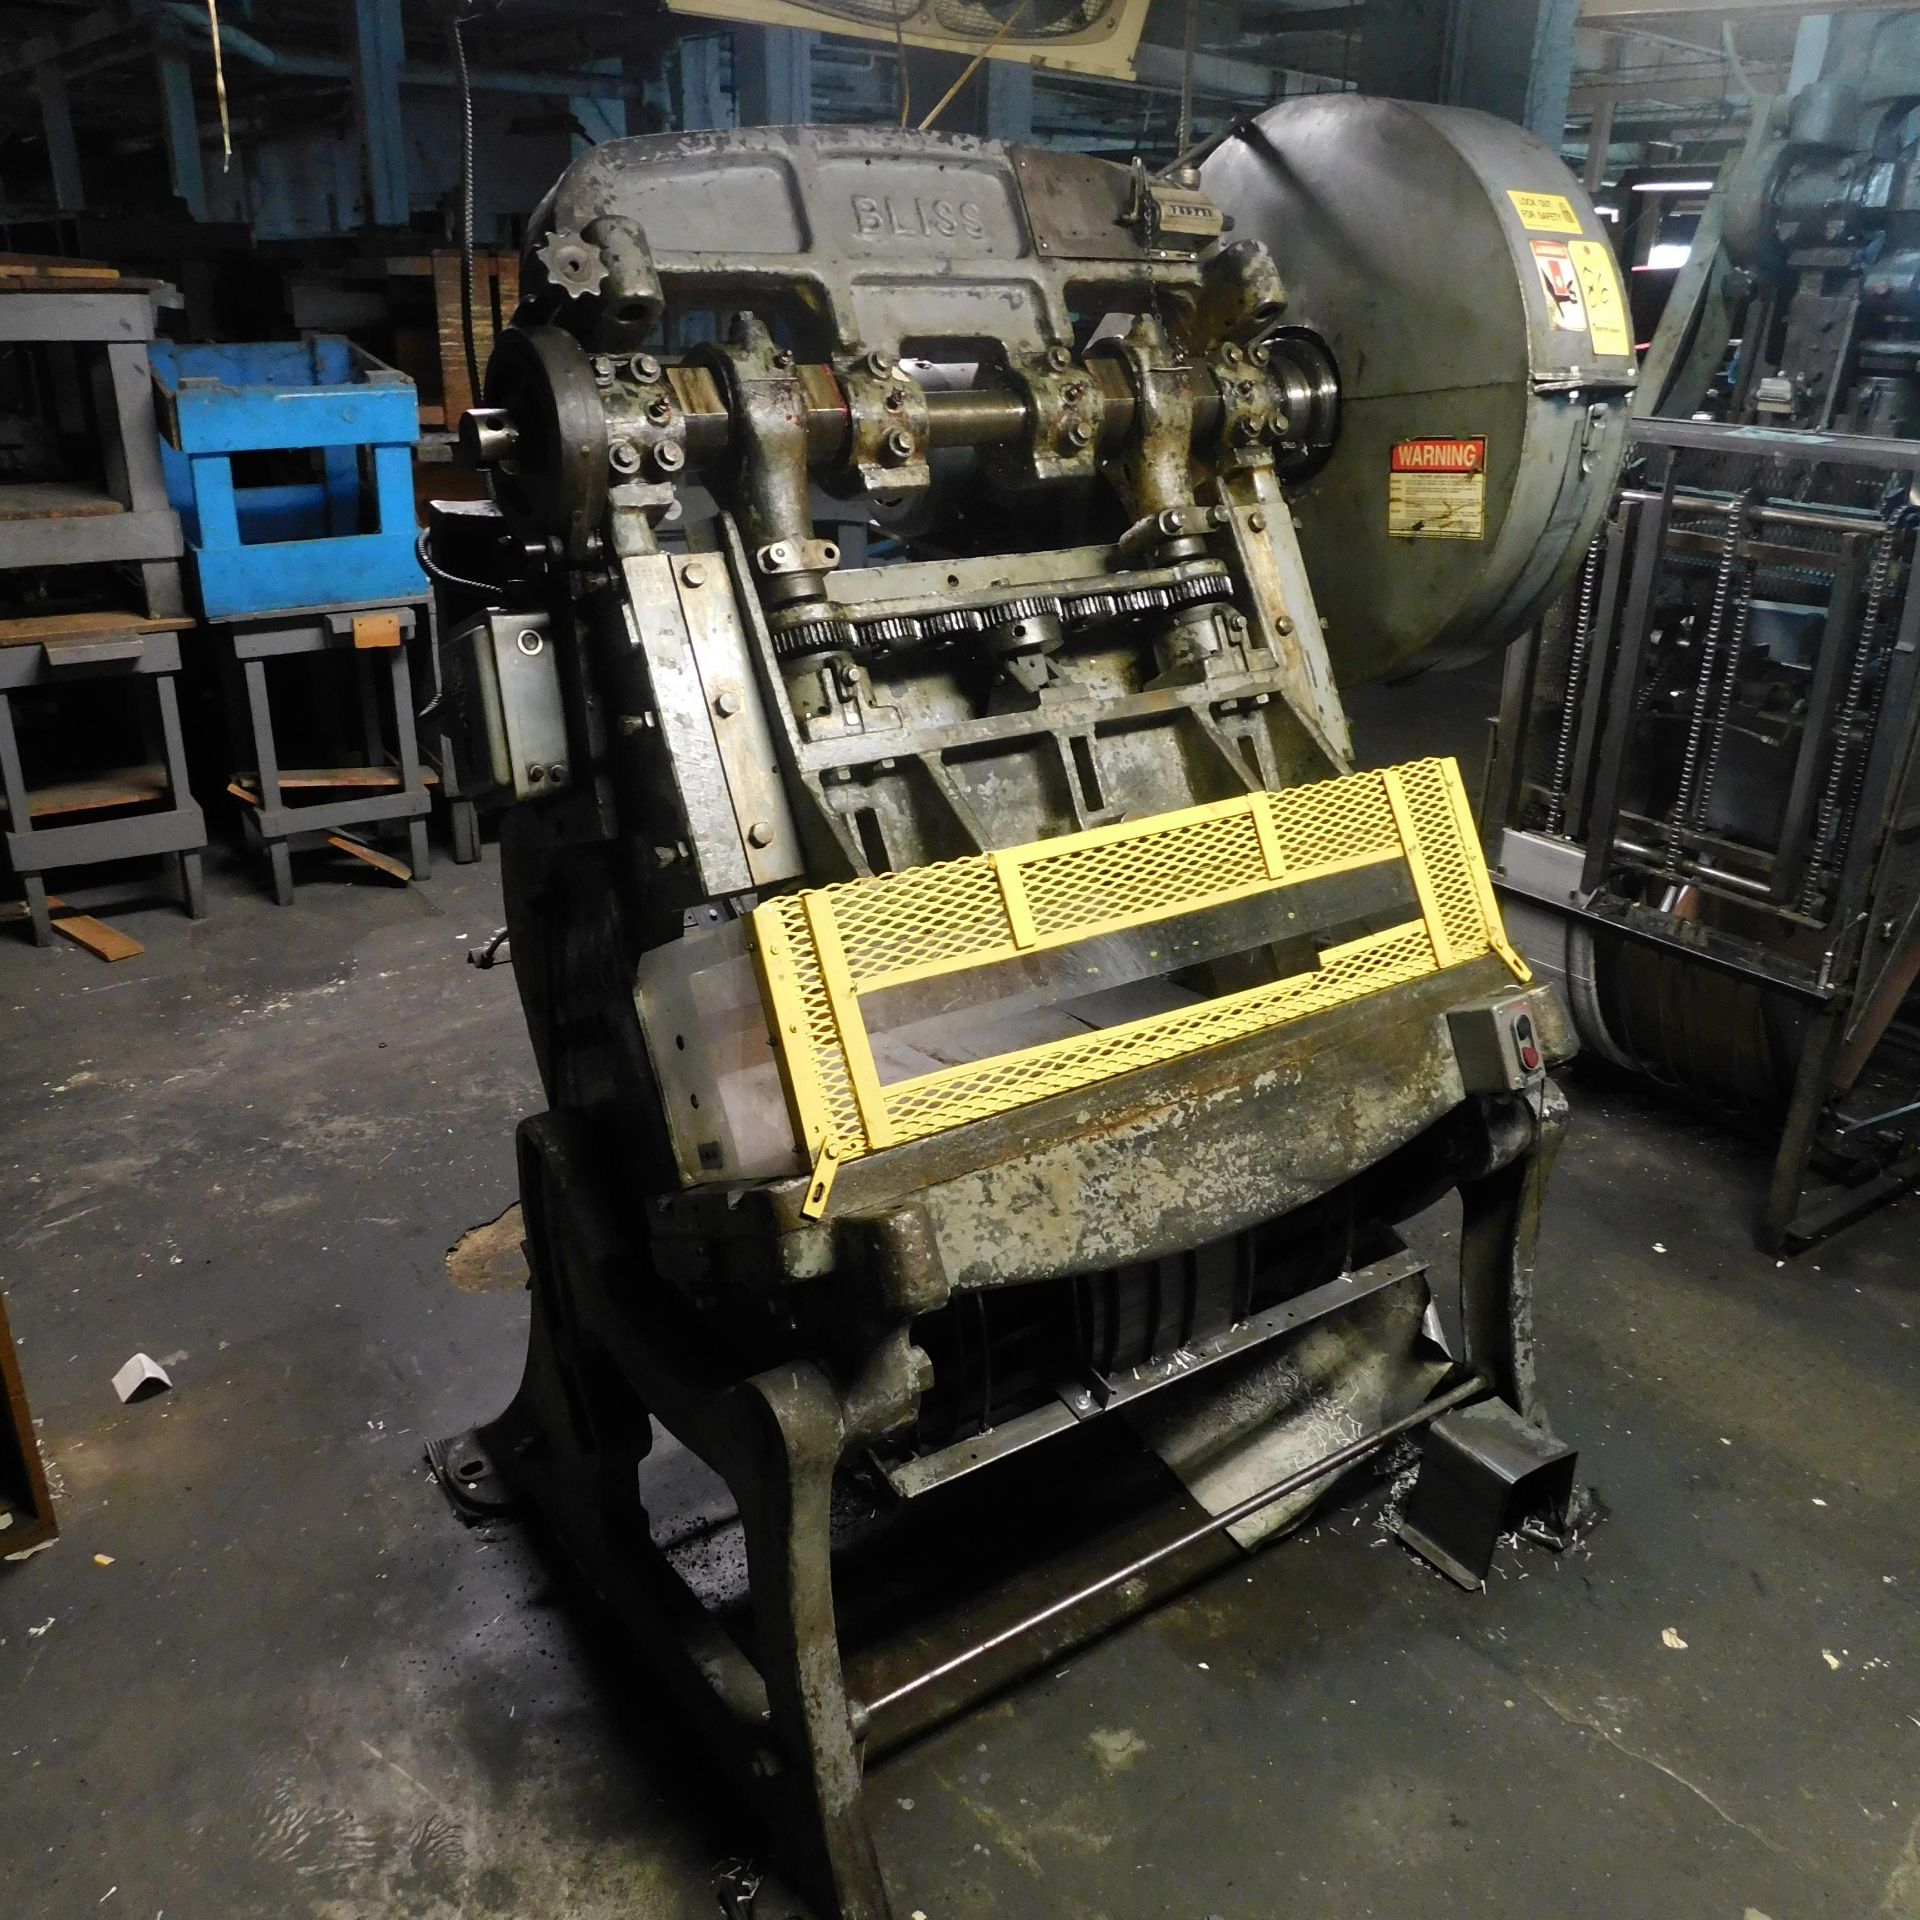 Bliss Model 103A OBI Punch Press, s/n 5035462, Mech. Clutch, 22 Ton